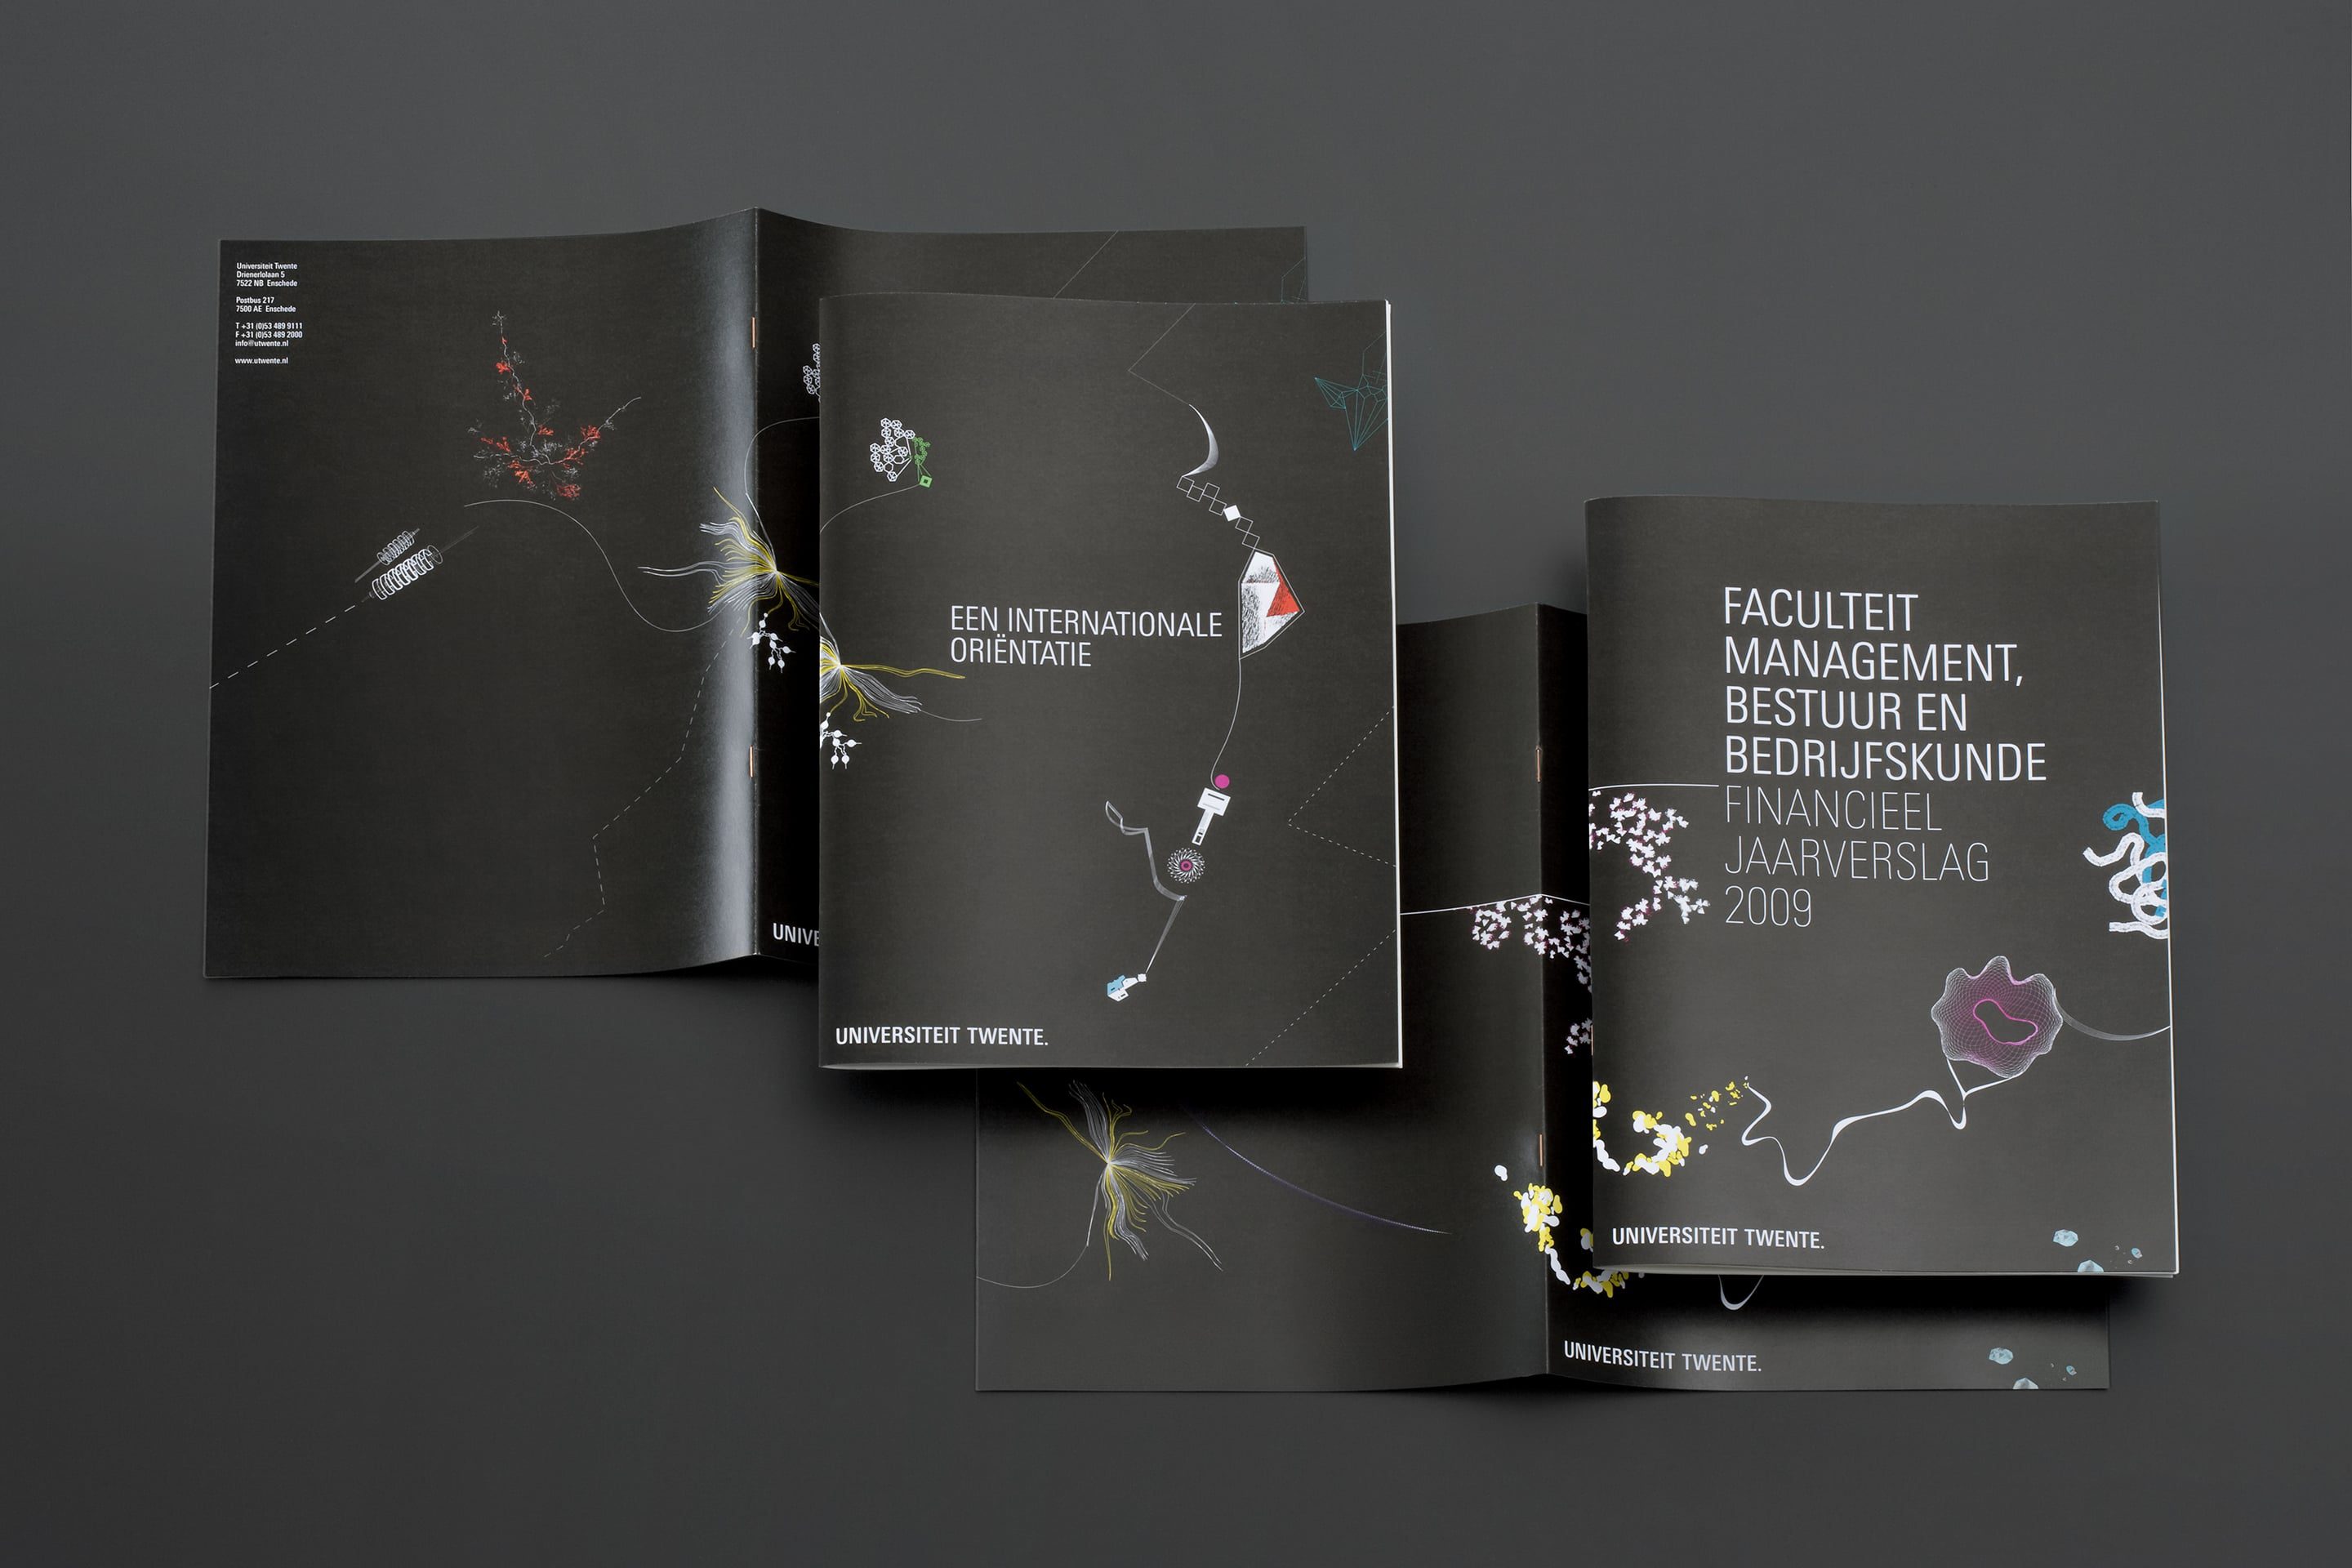 studio dumbar design visual brand identity for University of Twente Corporate brochure design with universe